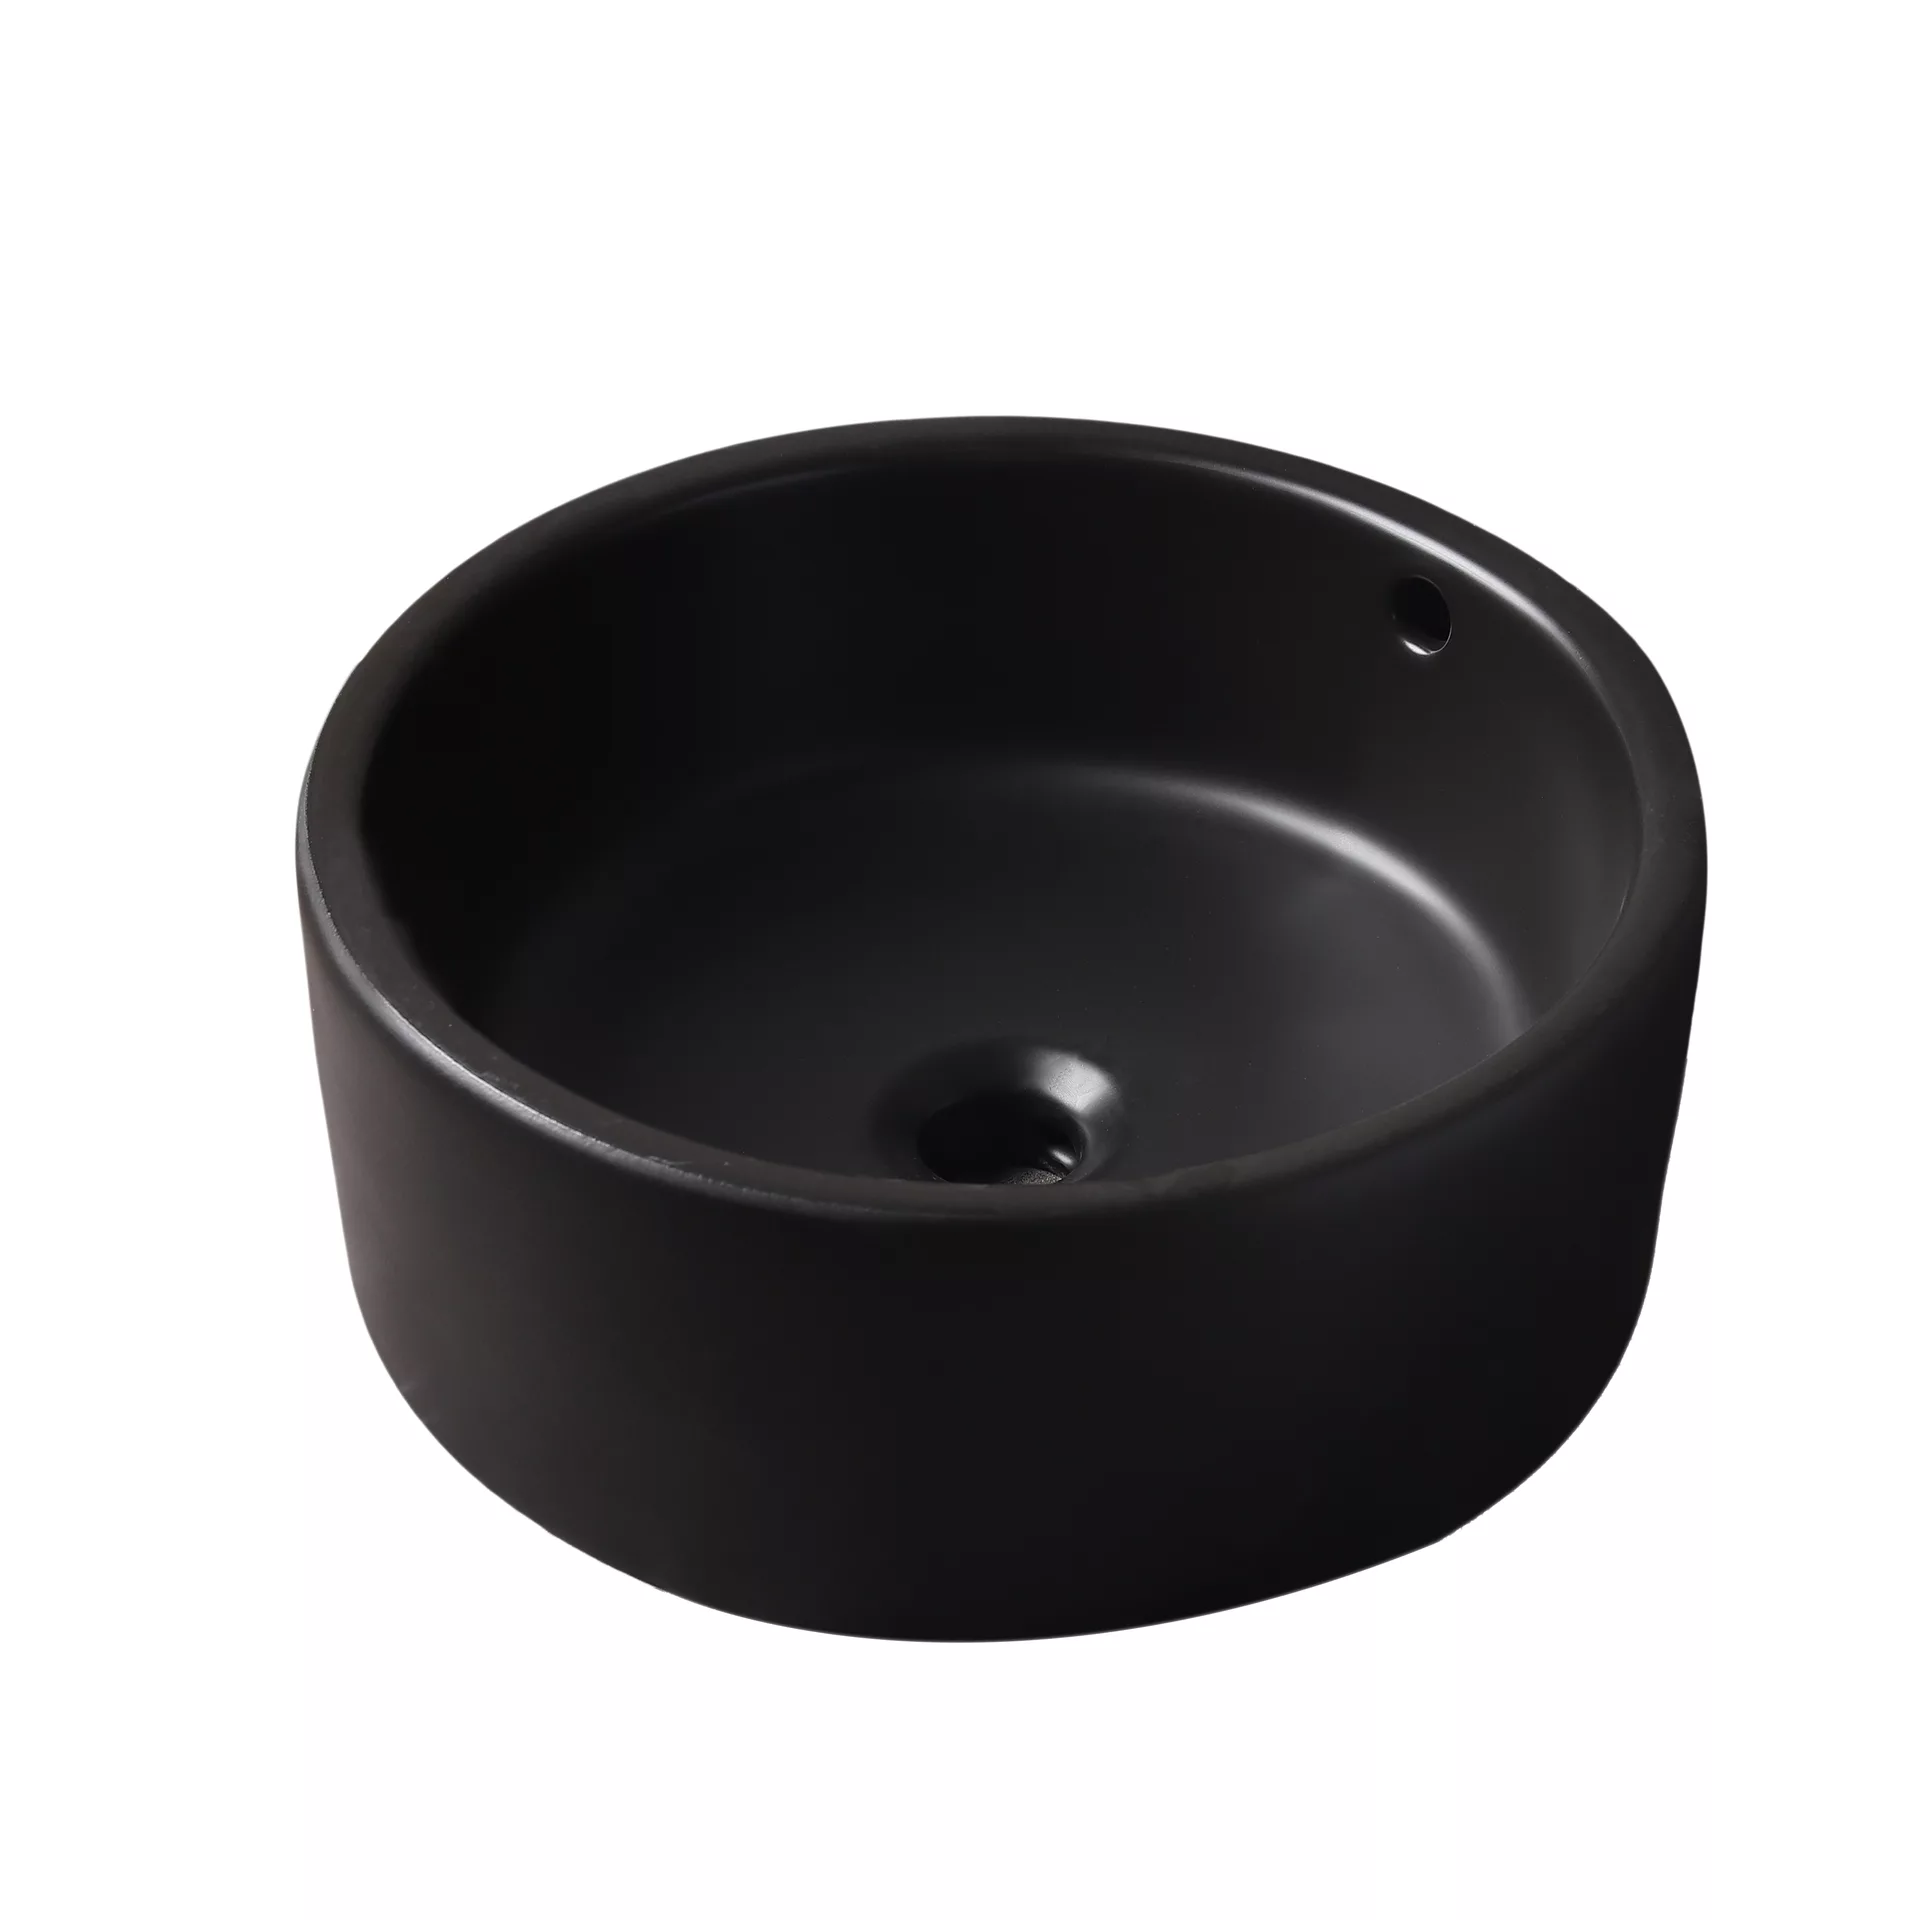 Накладная черная раковина для ванной GiD N9130bg керамическая дверная петля накладная amig черная 554 300х2 2 комплект 2 шт